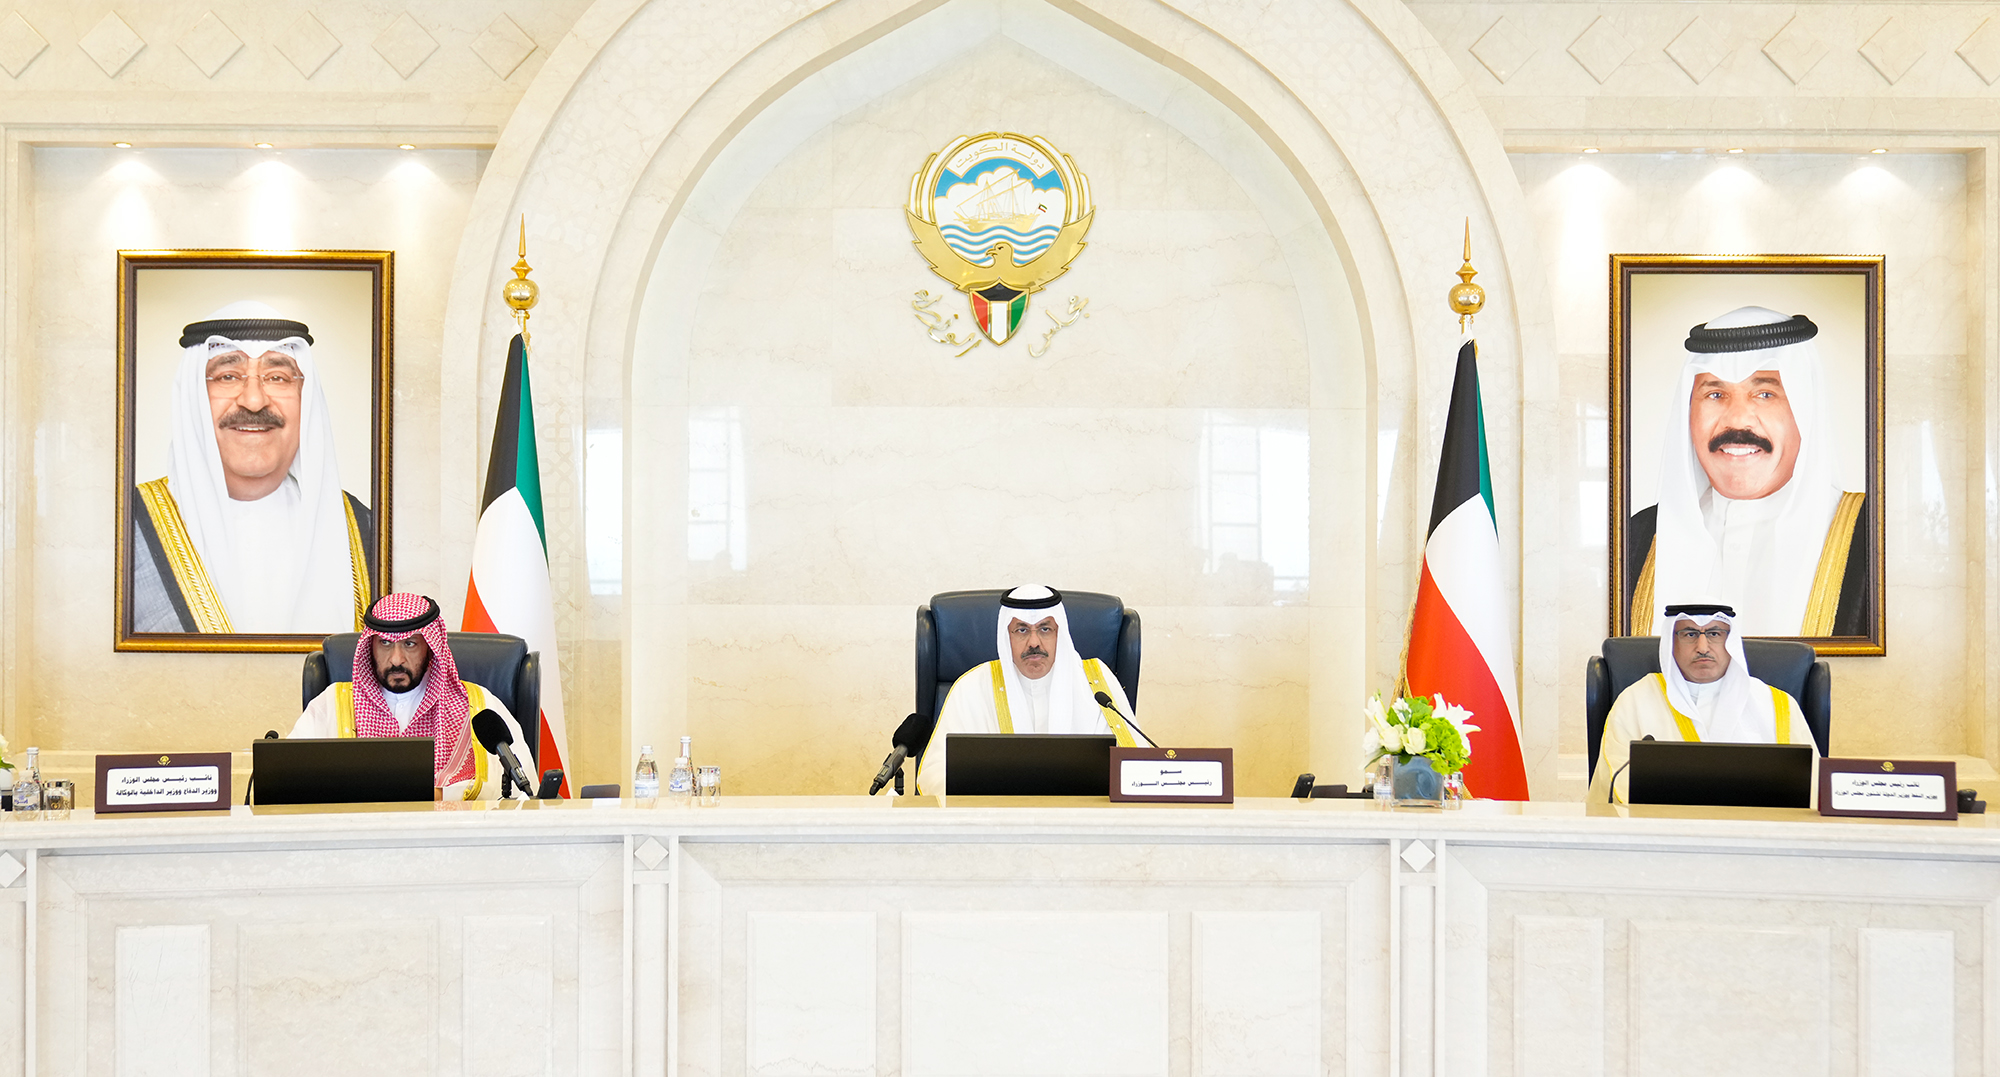 Kuwait's new cabinet convenes maiden meeting